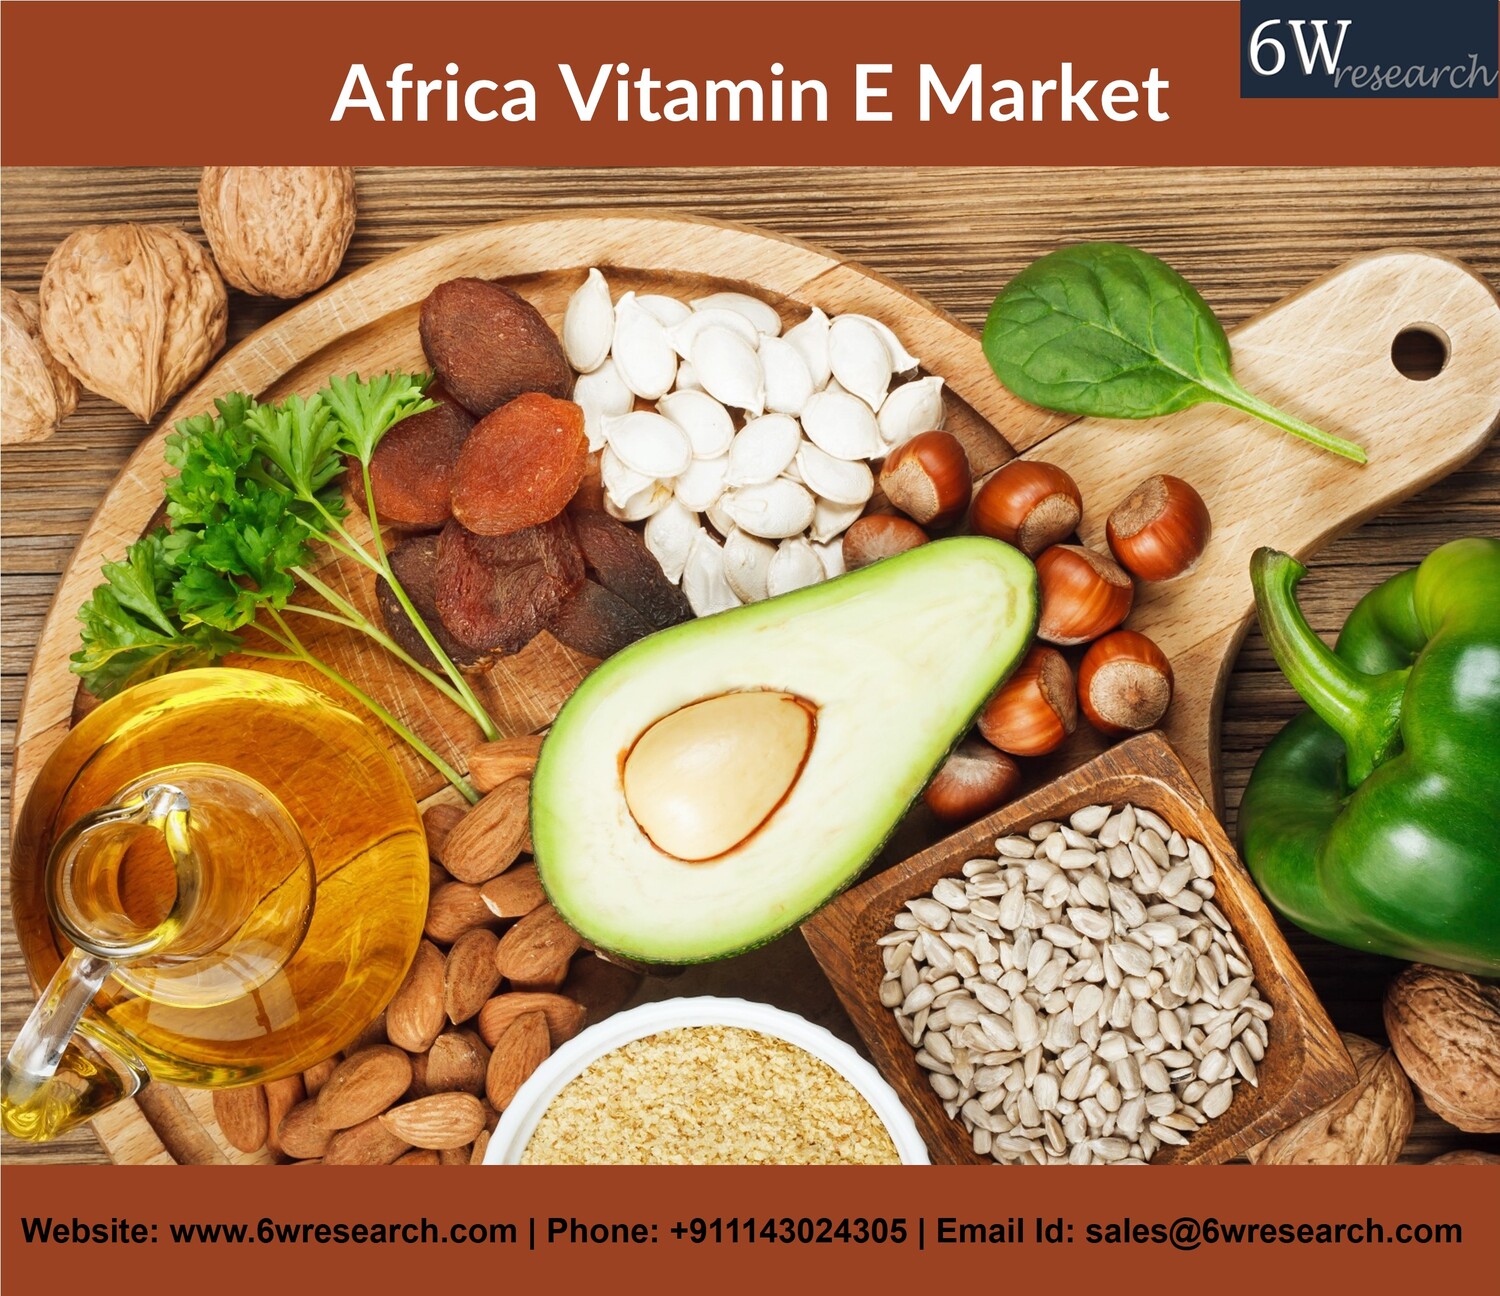 Africa Vitamin E Market